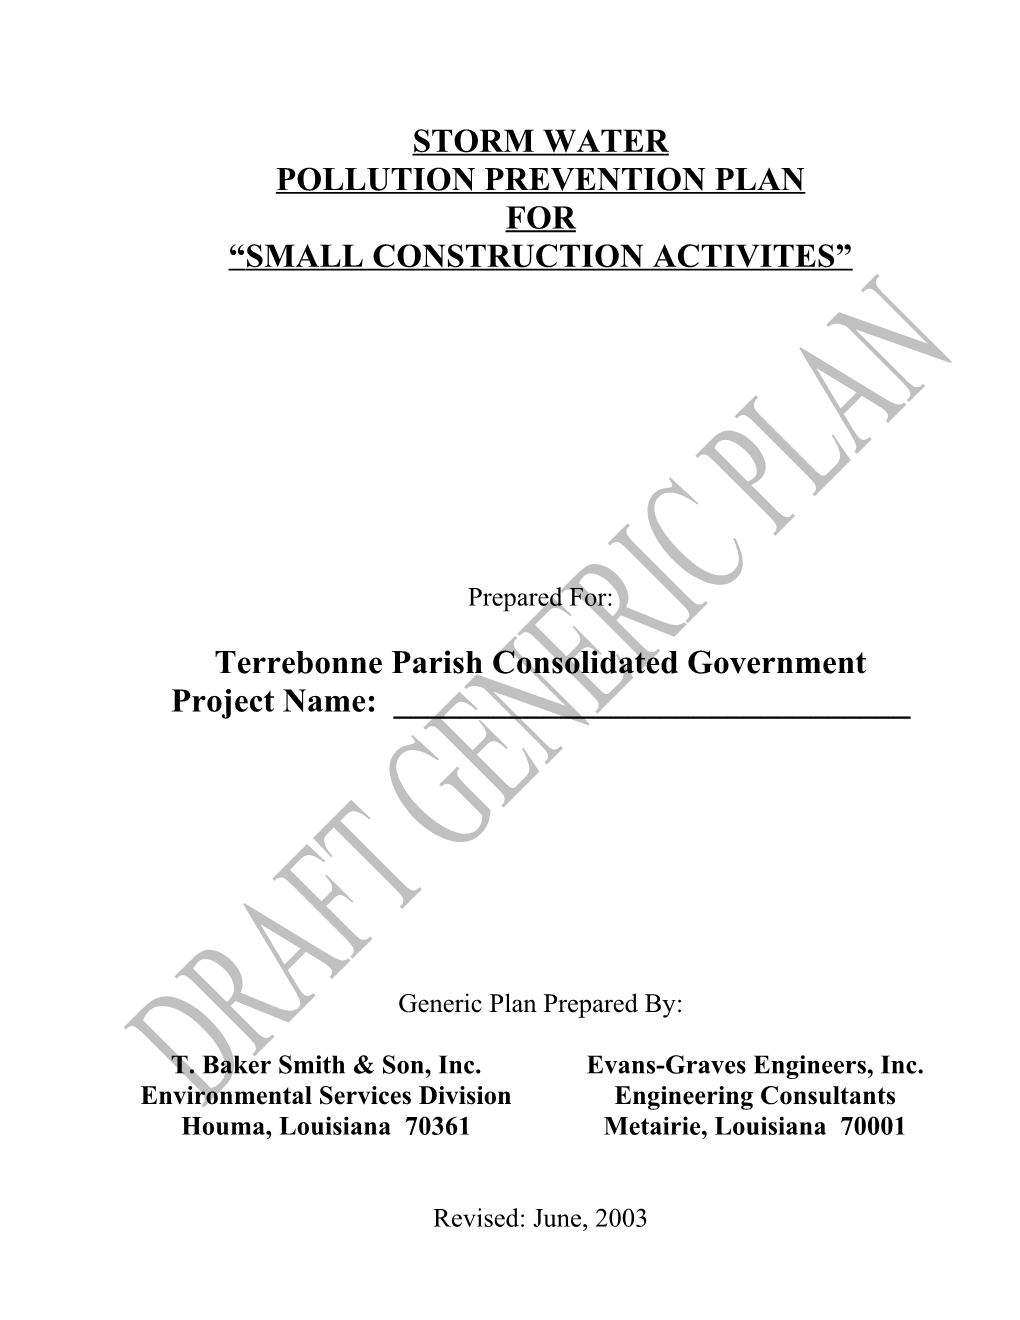 Terrebonne Parish Consolidated Government